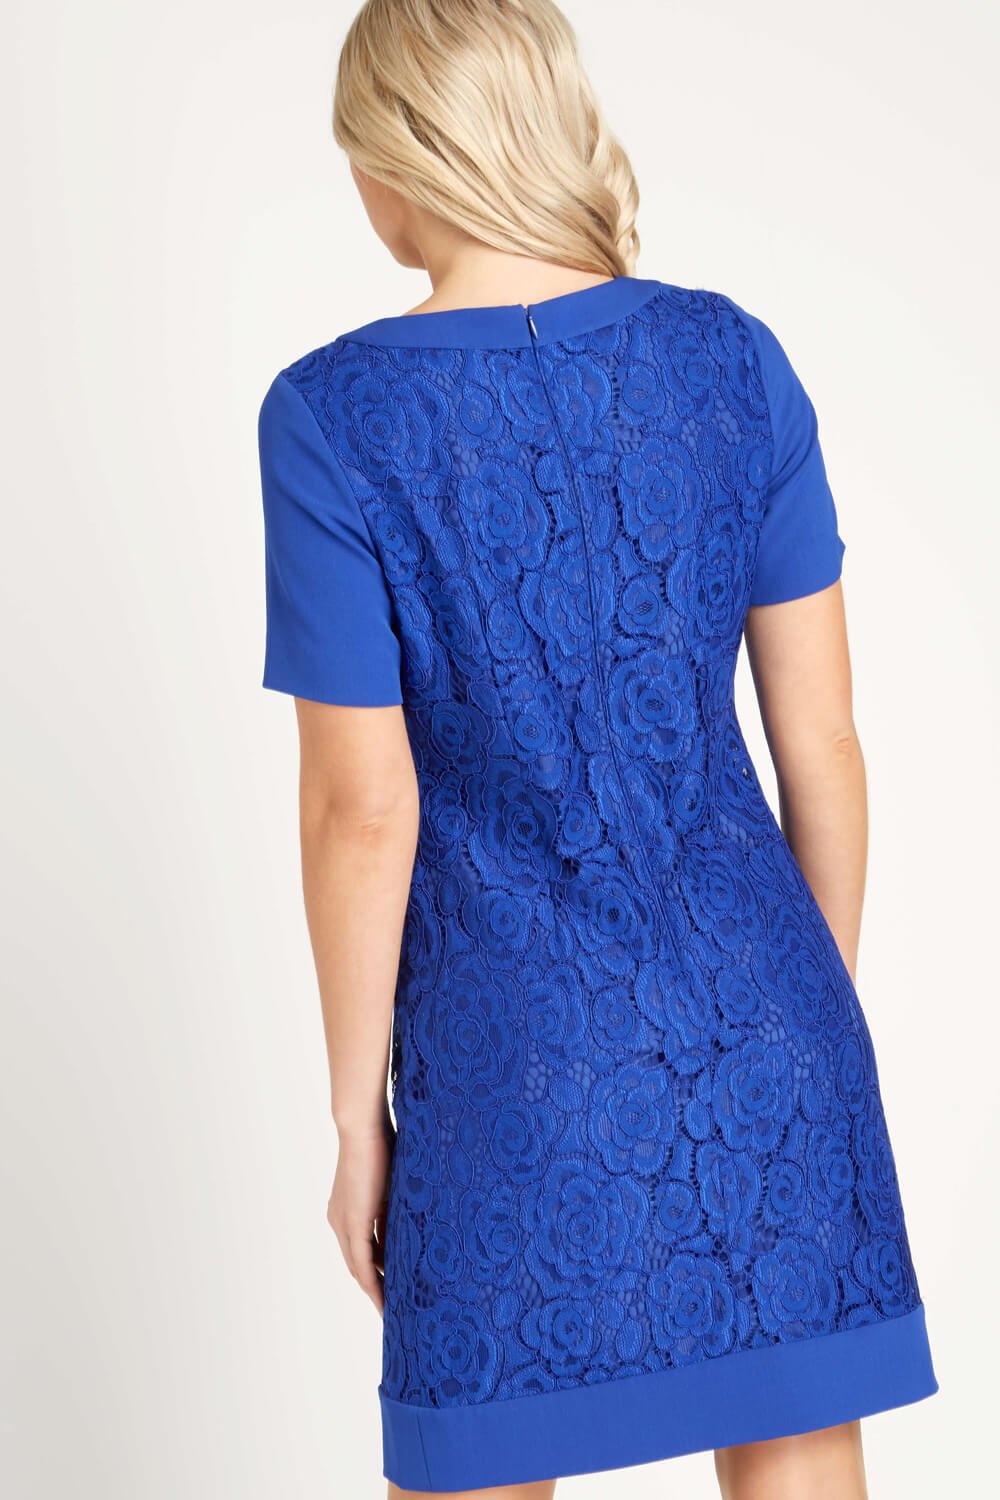 Royal Blue Lace Shift Dress, Image 3 of 5